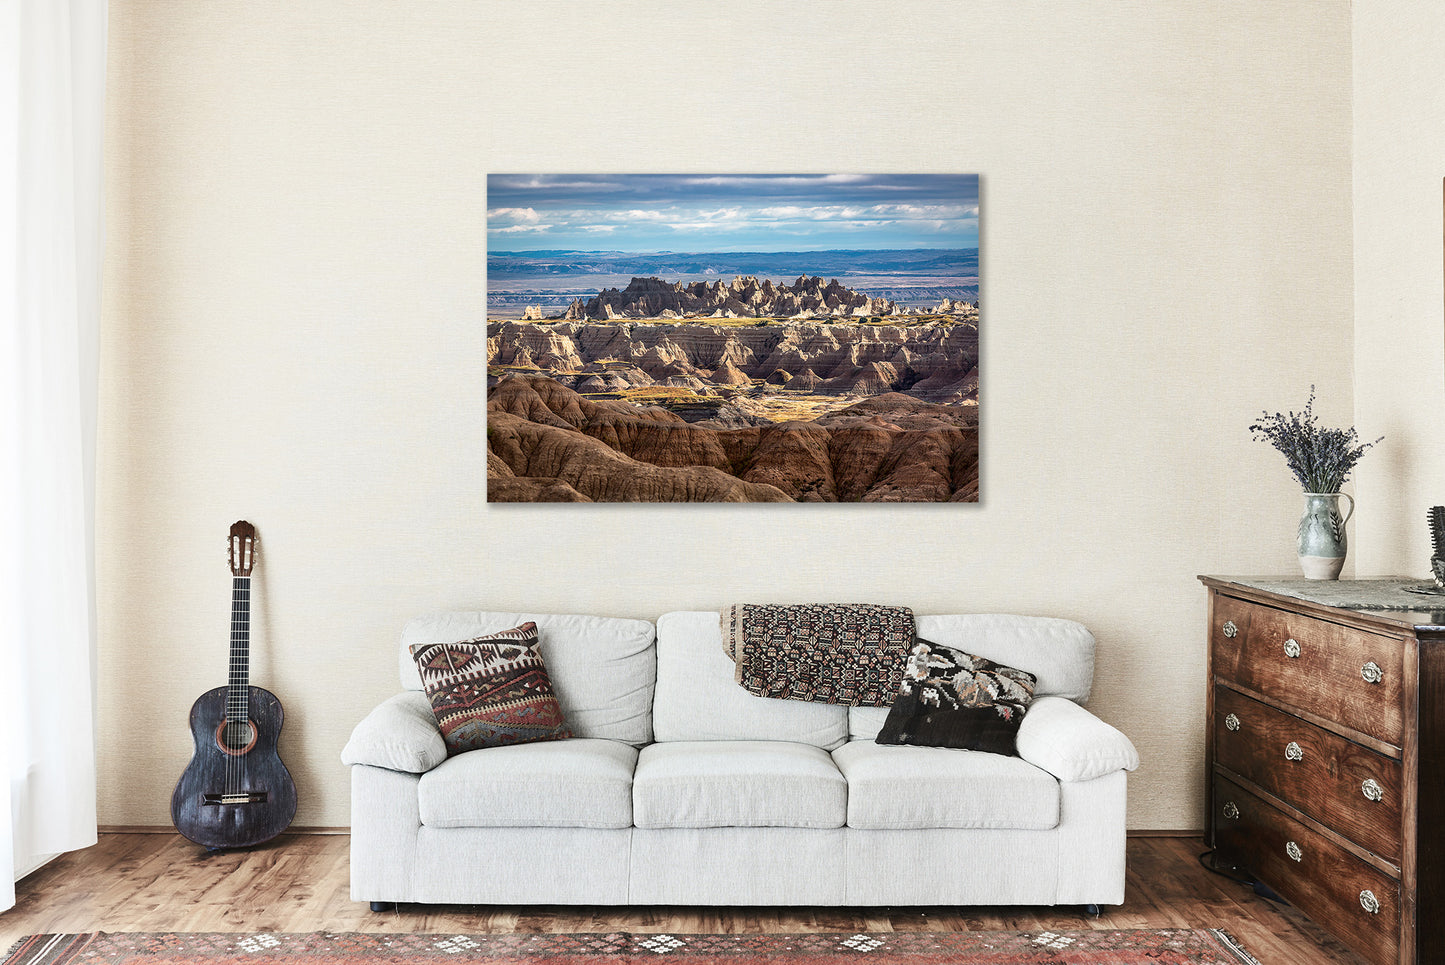 Canvas Wall Art | Badlands National Park Picture | Landscape Gallery Wrap | South Dakota Photography | Western Decor